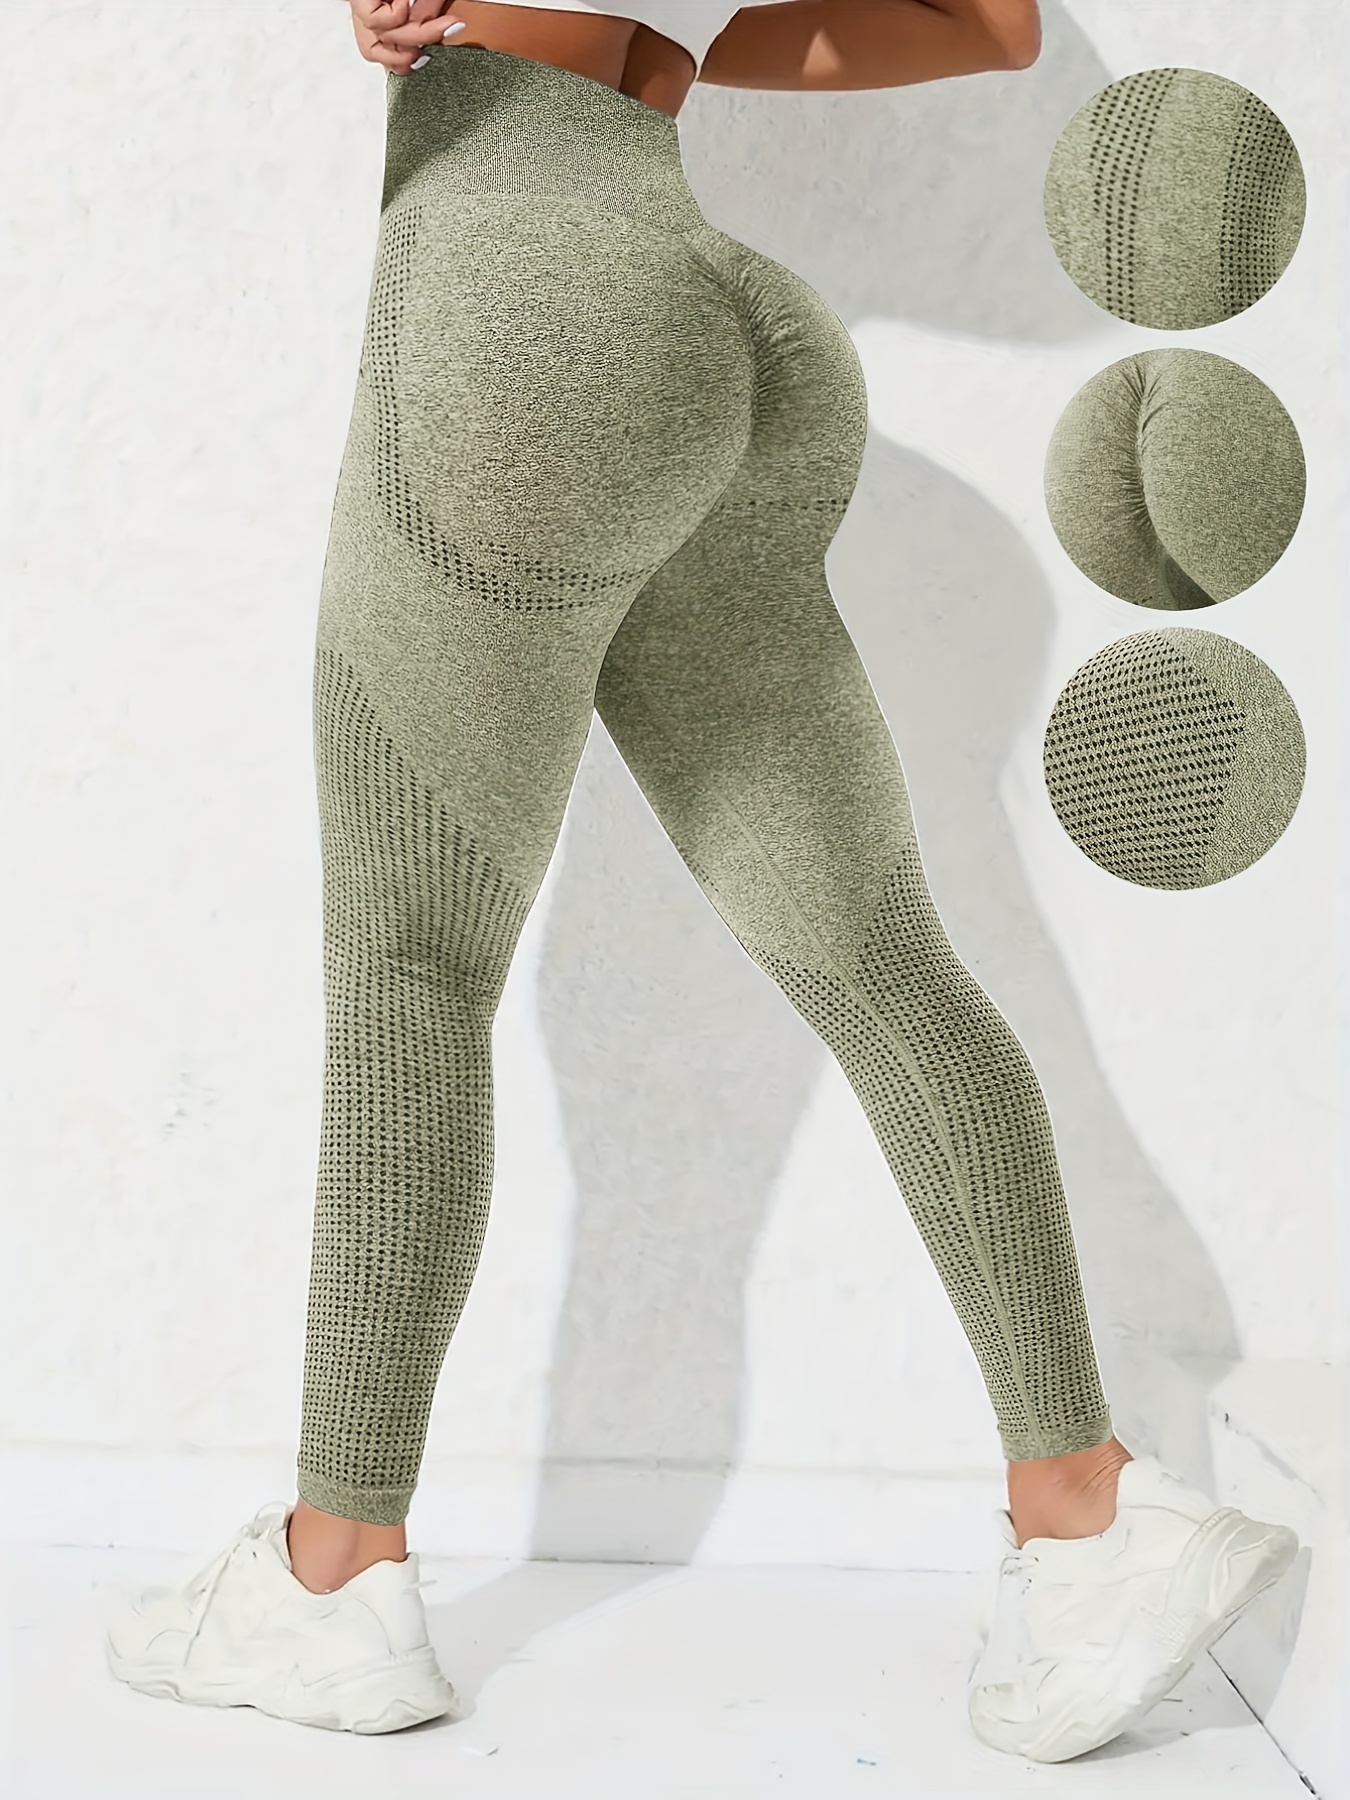 GILLYA Seamless Yoga Pants Seamless Workout Leggings for Women